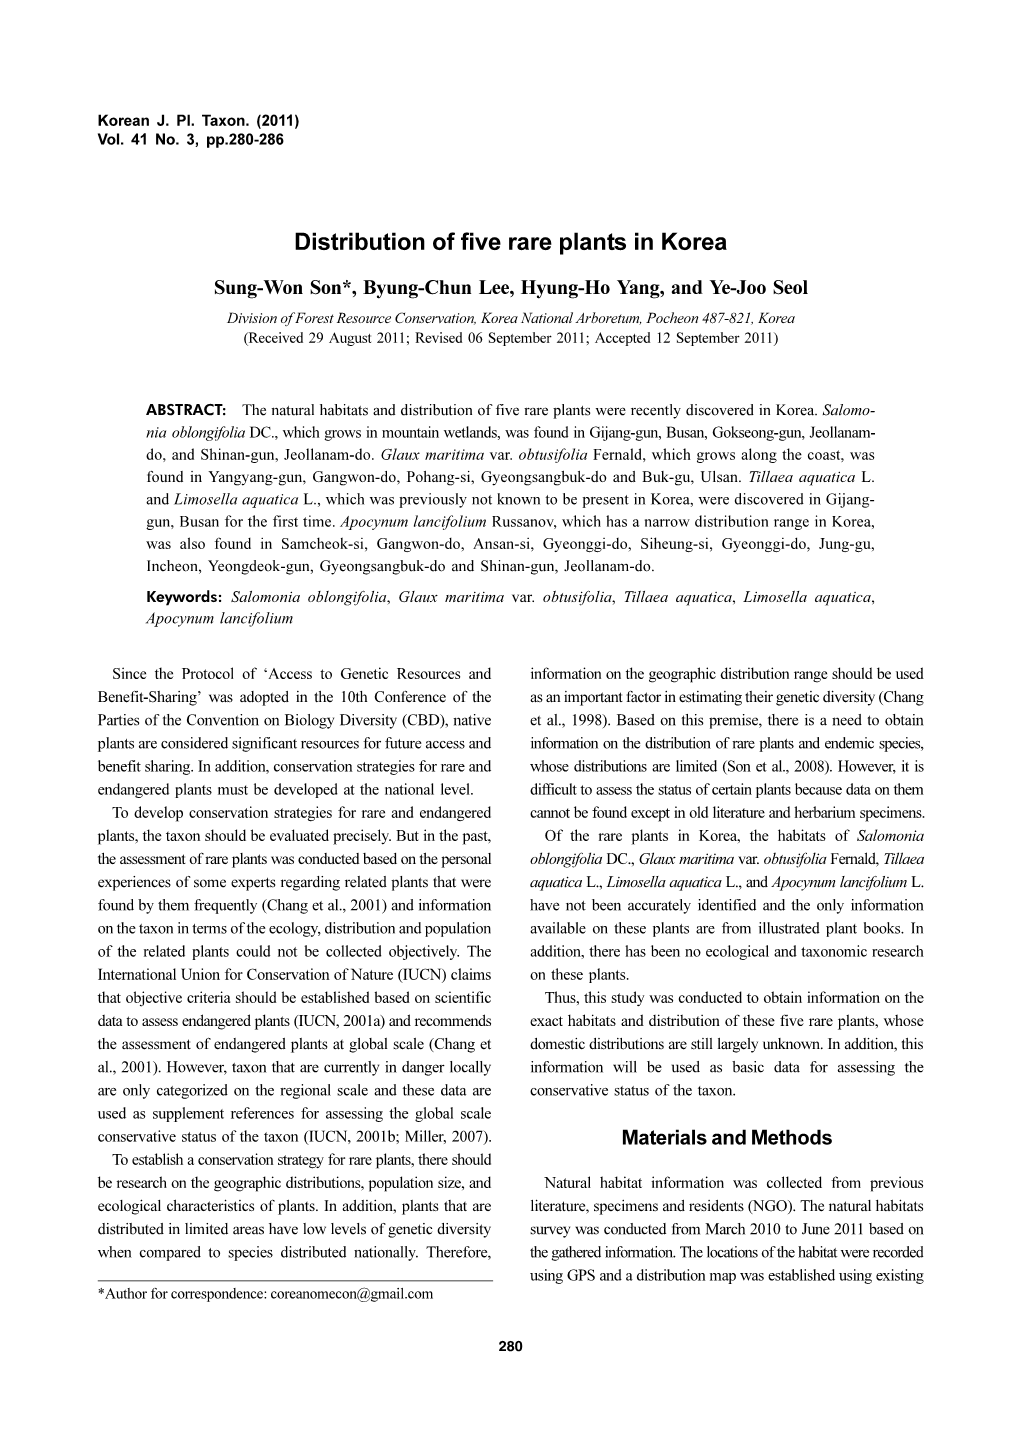 Distribution of Five Rare Plants in Korea